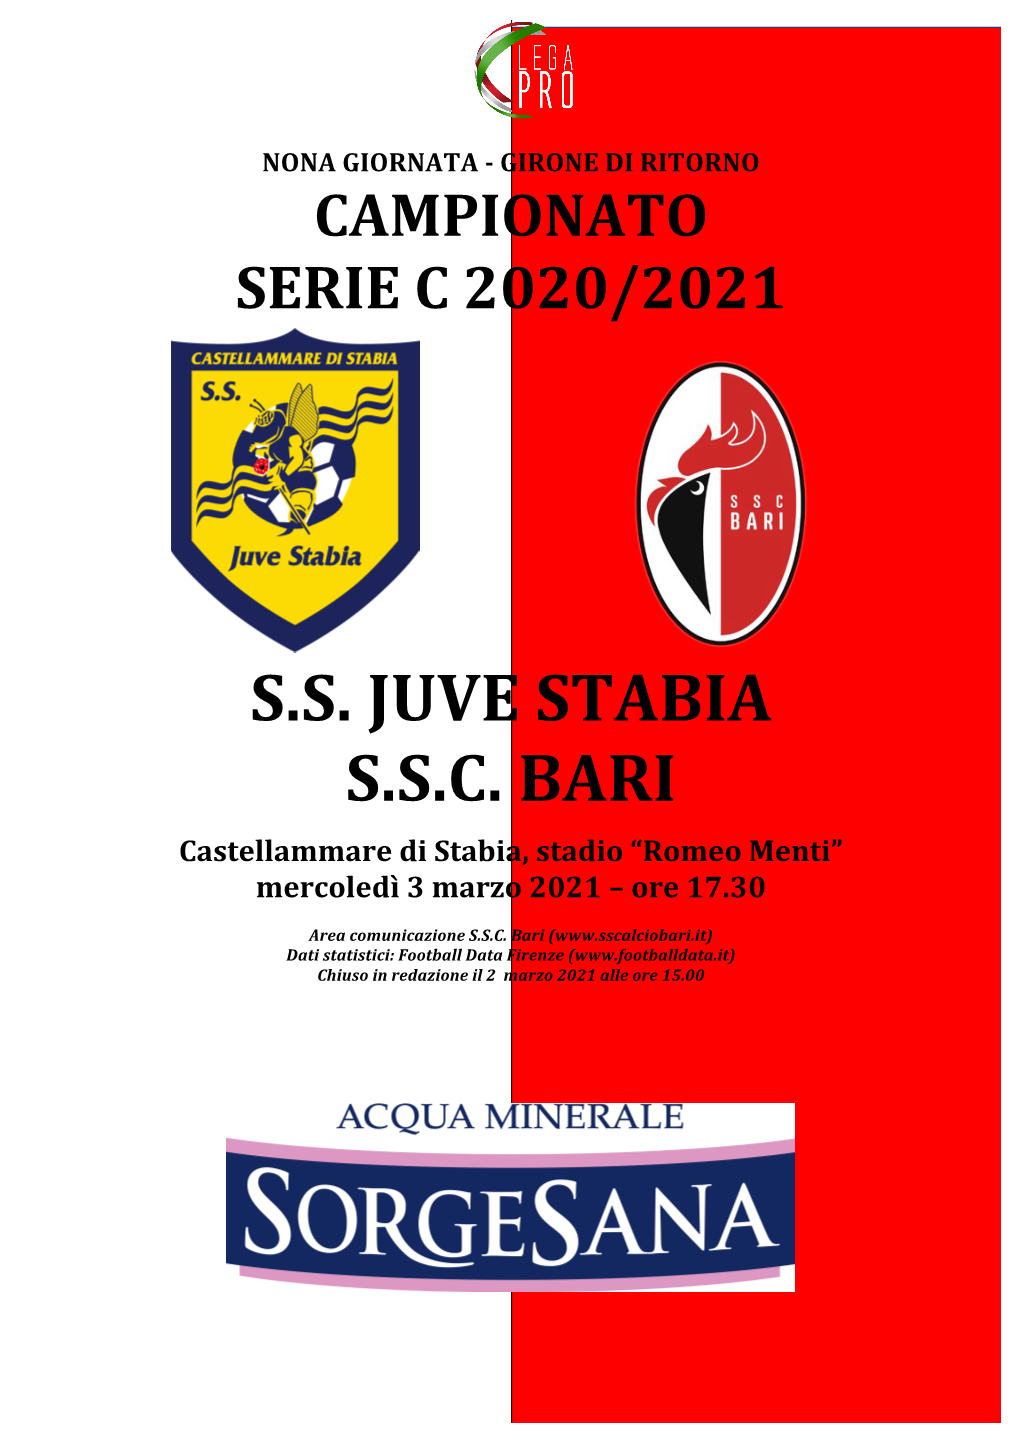 S.S. Juve Stabia S.S.C. Bari